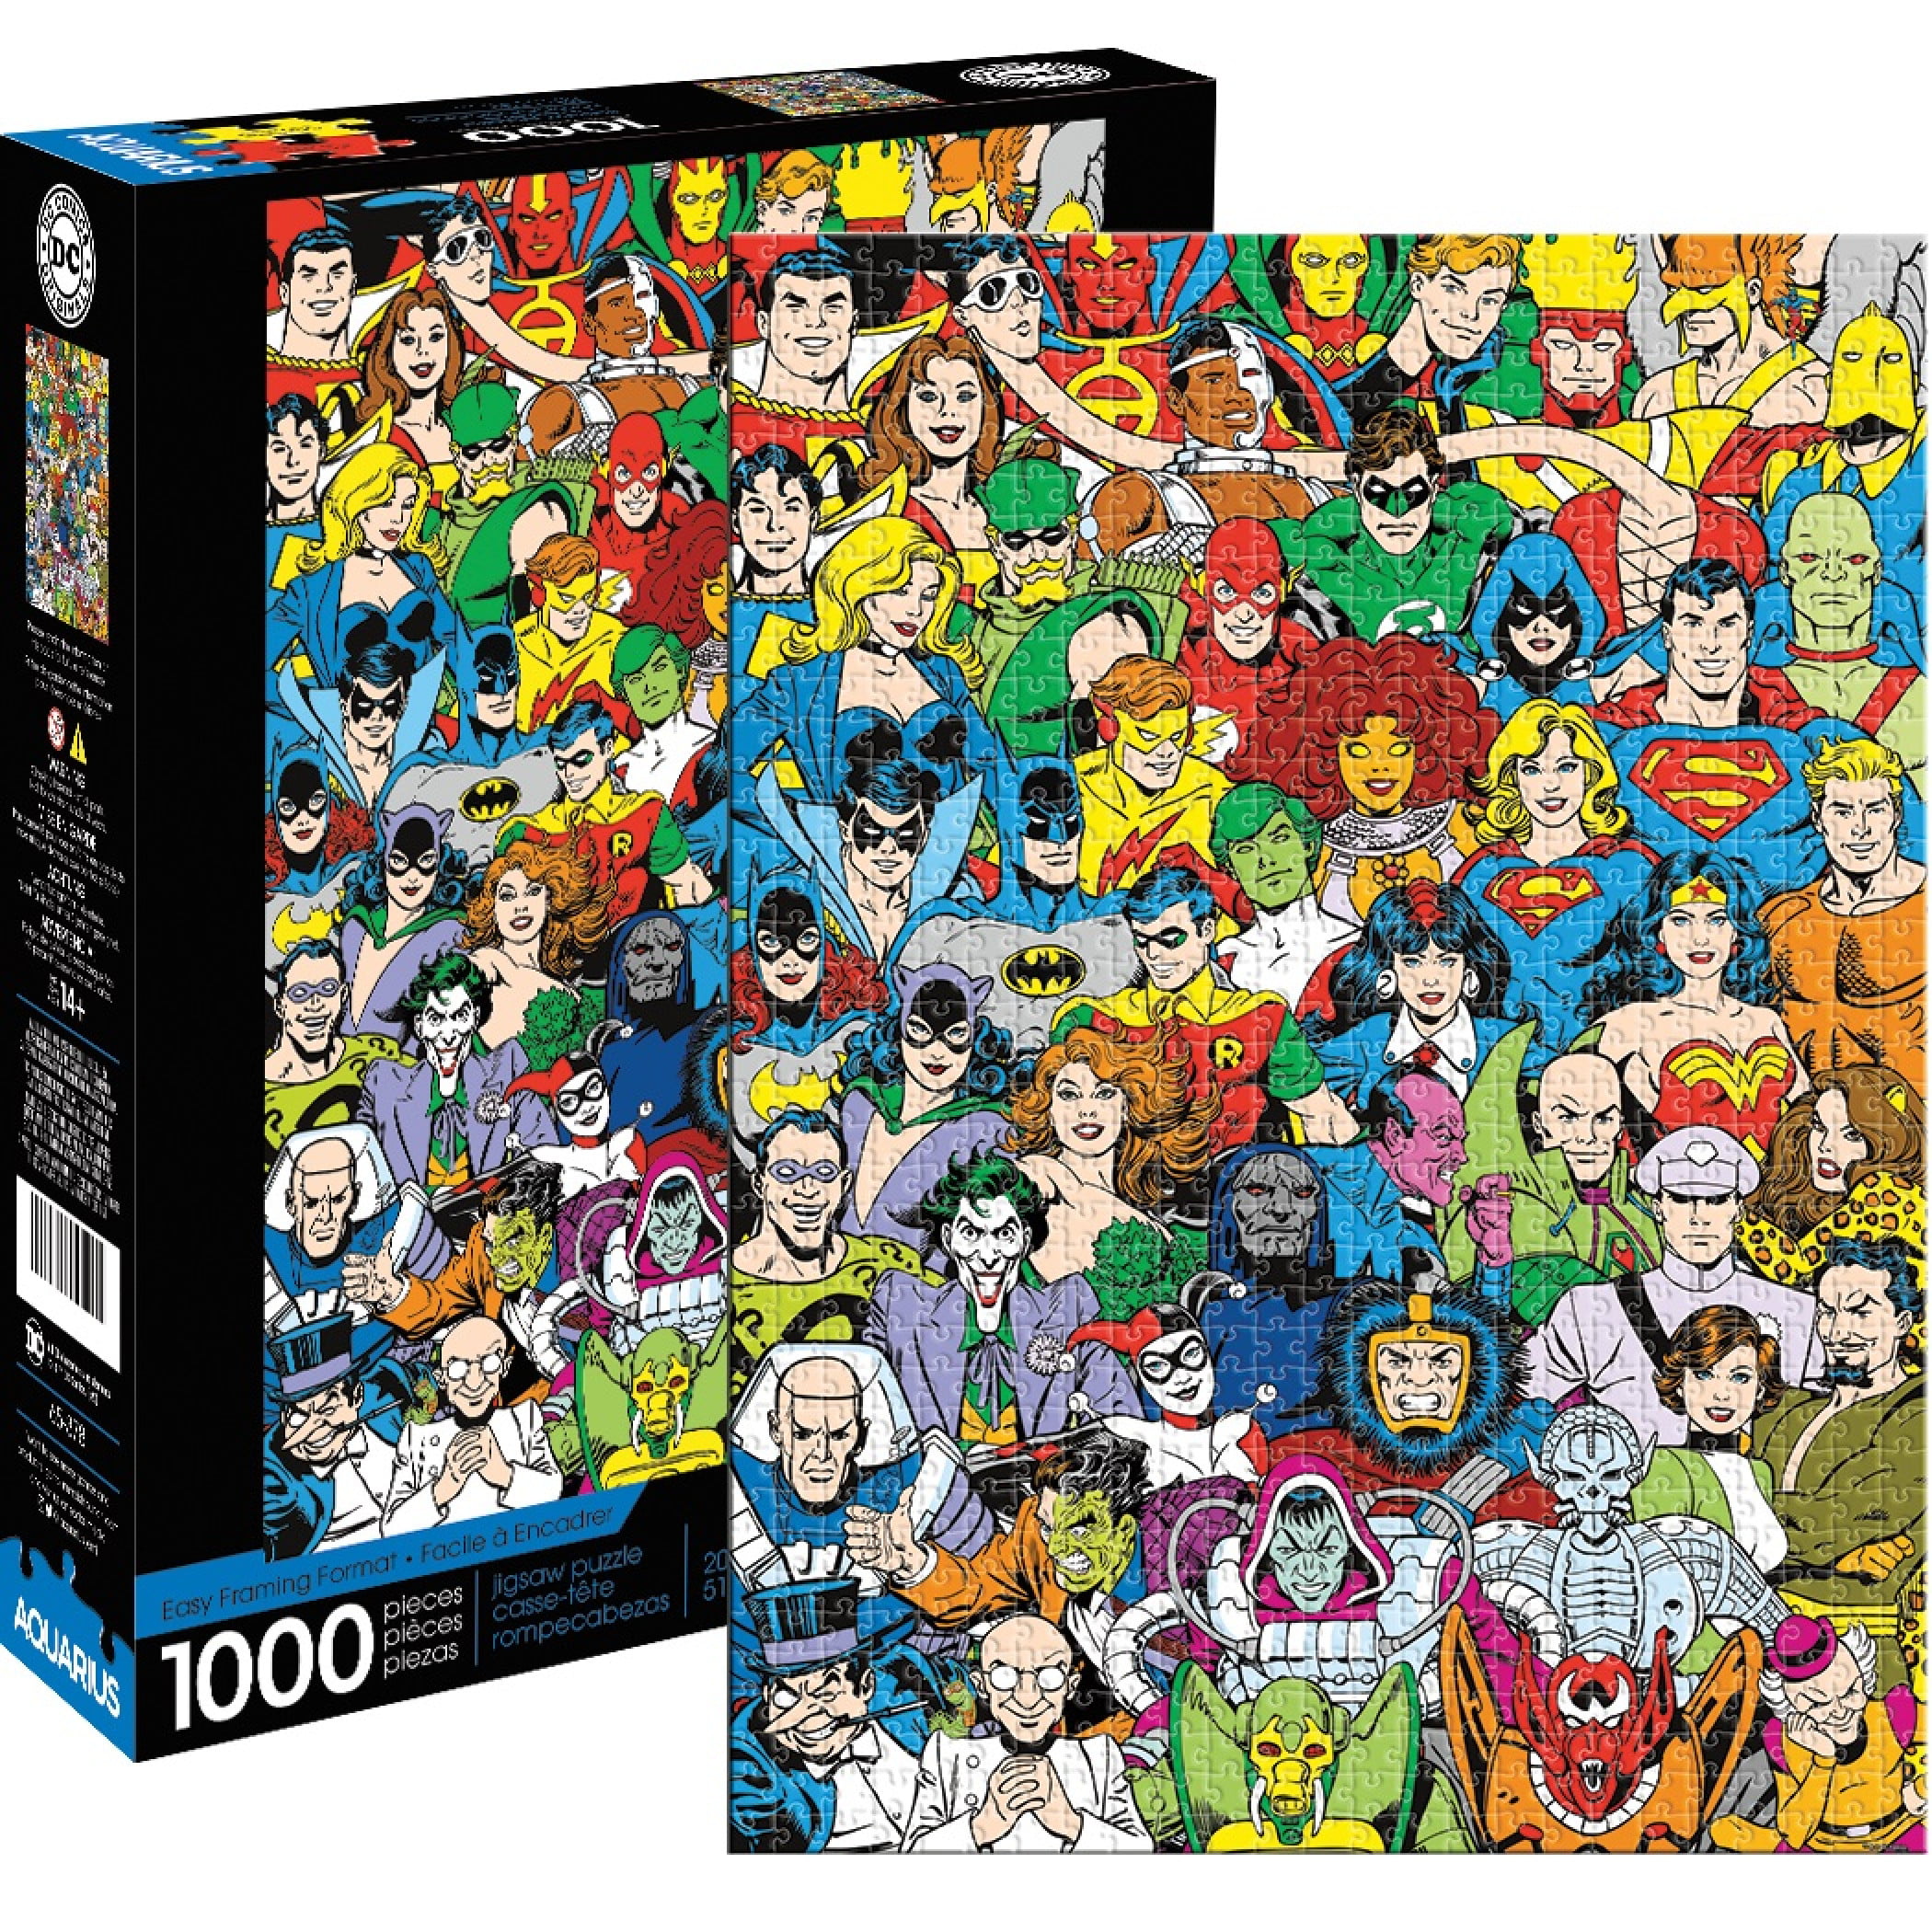 3000 Piece Jigsaw Puzzle Officially Licensed AQUARIUS DC Comics Puzzle Cast 